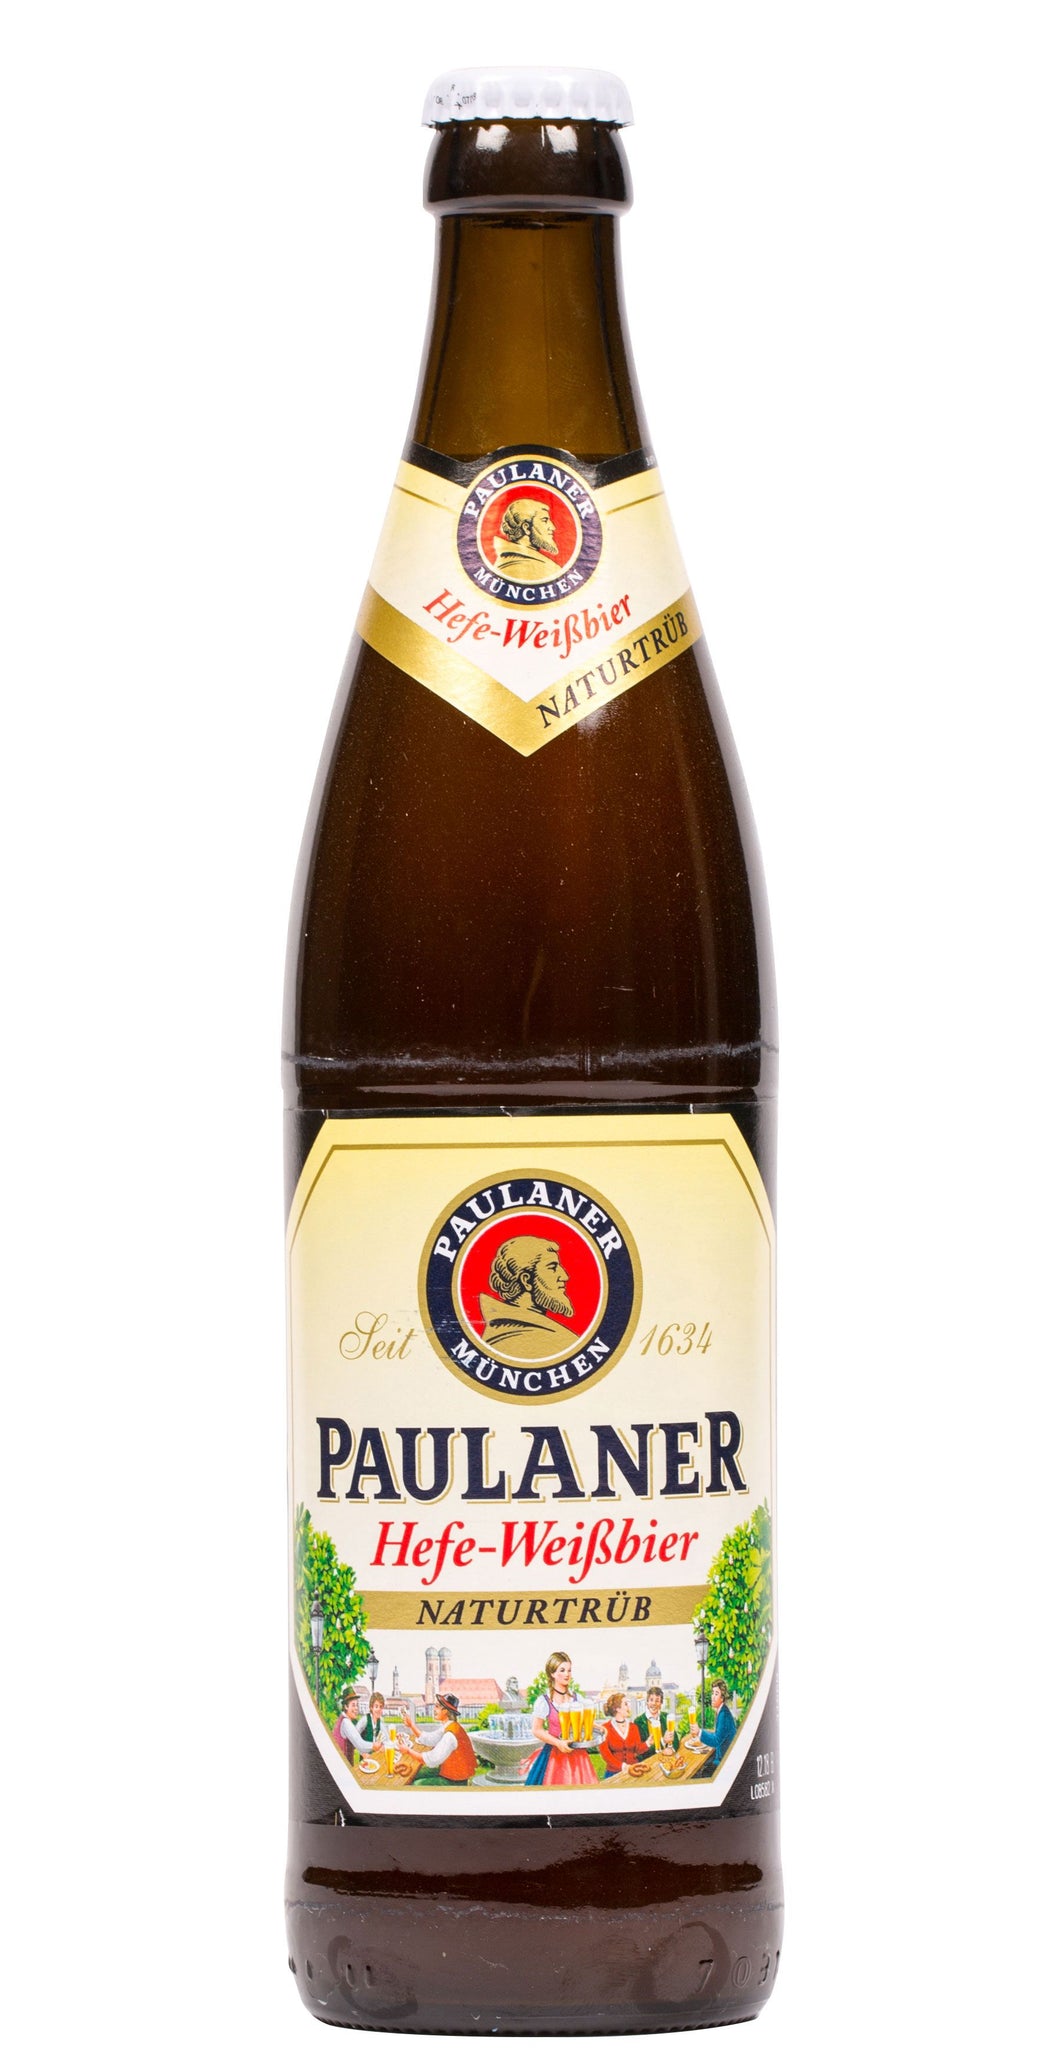 Hefe-Weissbier - Paulaner Munchen - Hefe-Weissbier, 5.5%, 500ml Bottle